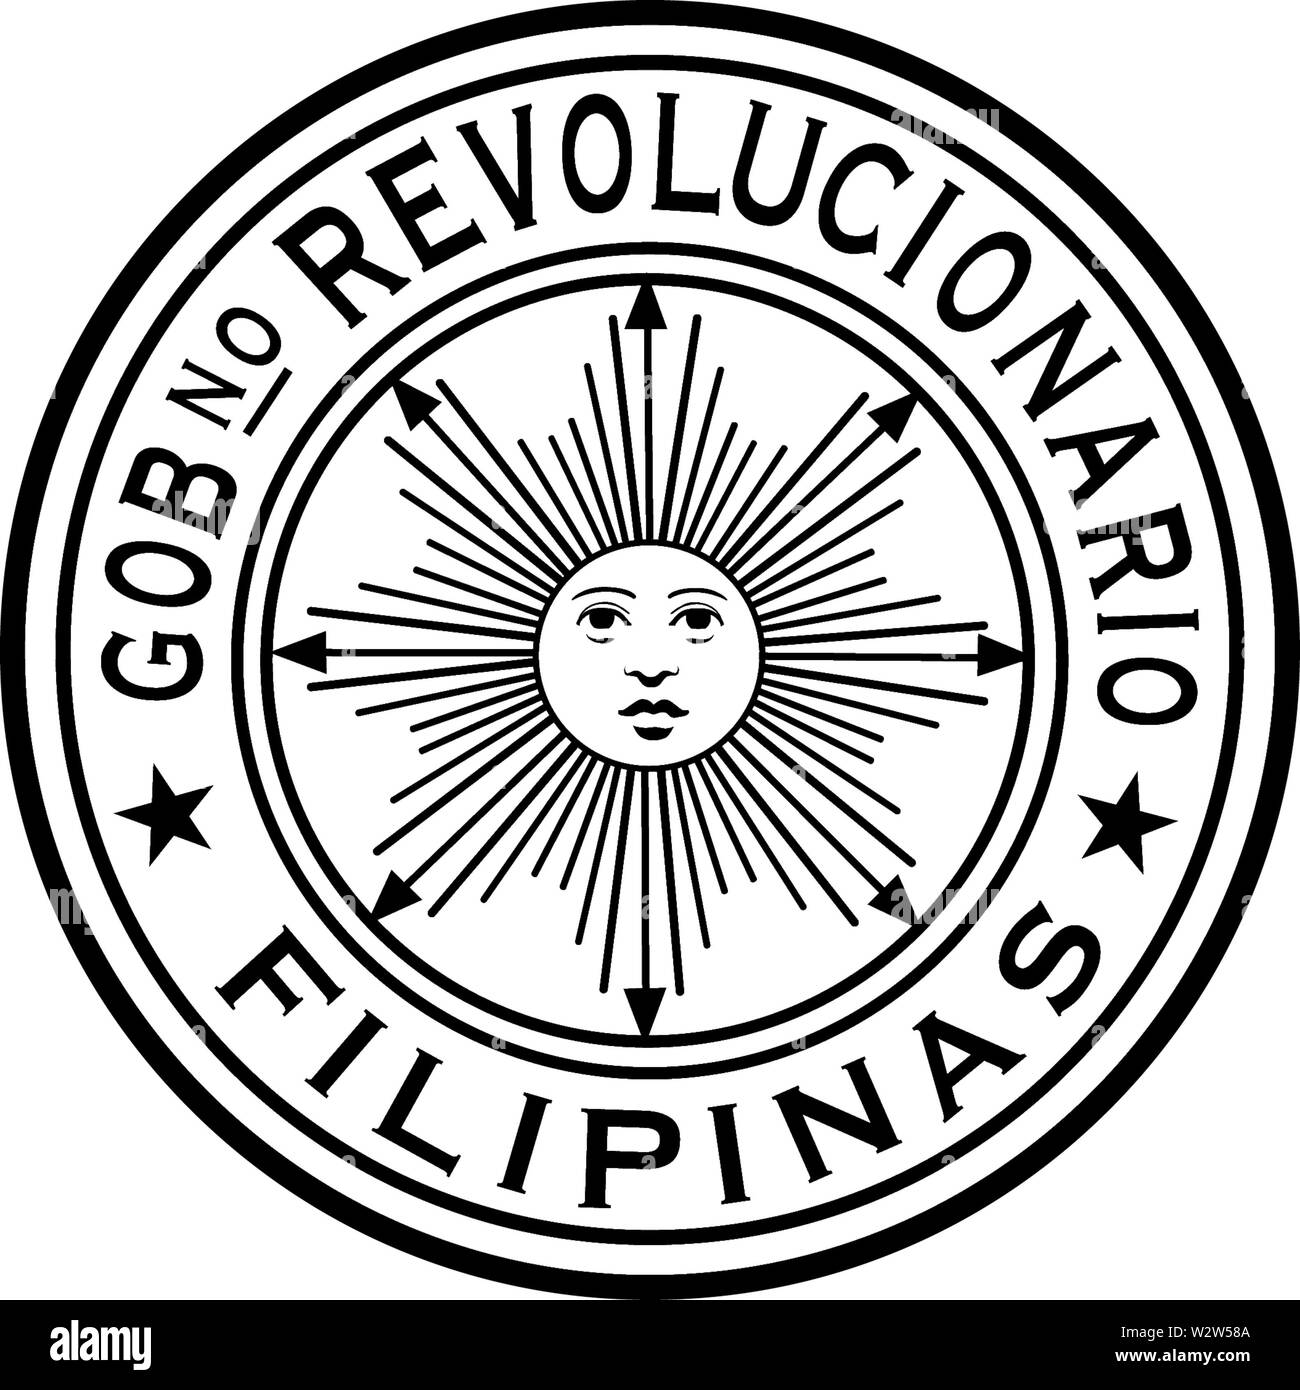 Gobierno Revolucionario Filipinas Stock Photo